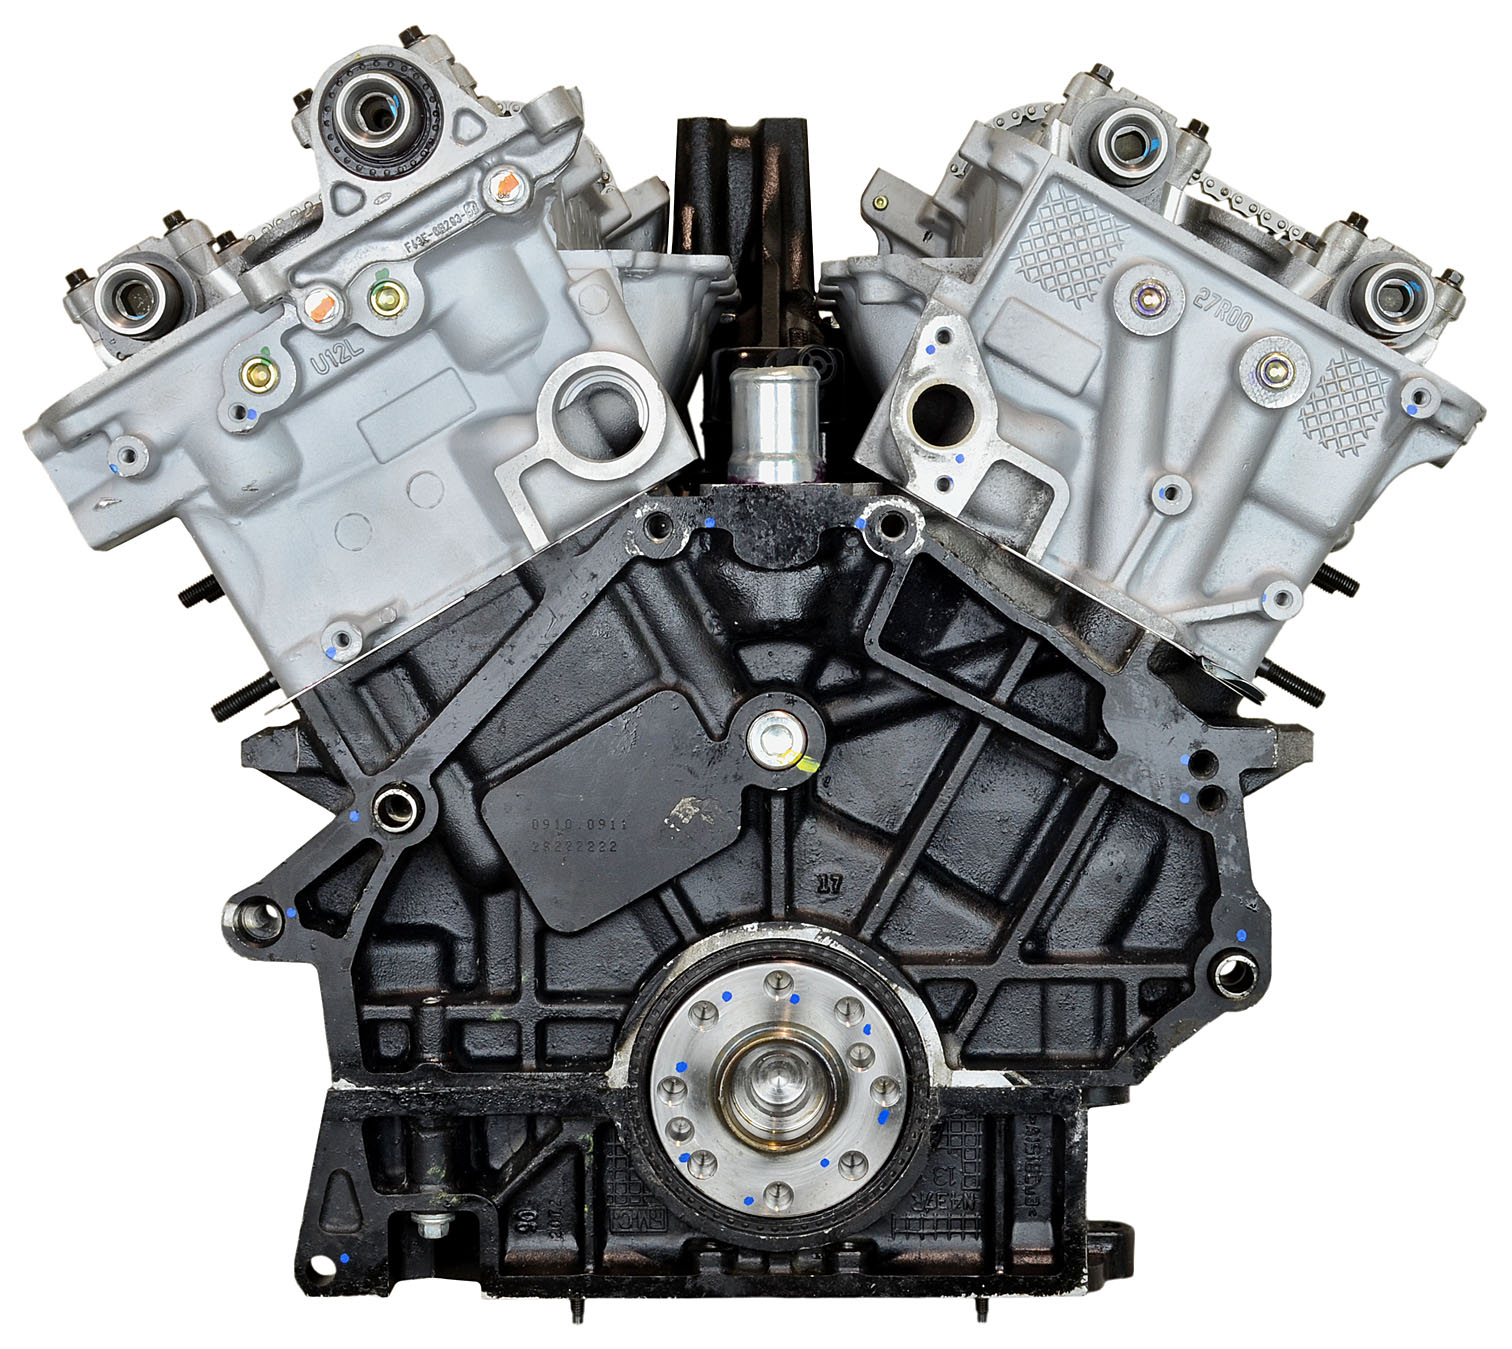 Ford Mazda Duratec 3.0L V6 Remanufactured Engine - 2001-2004